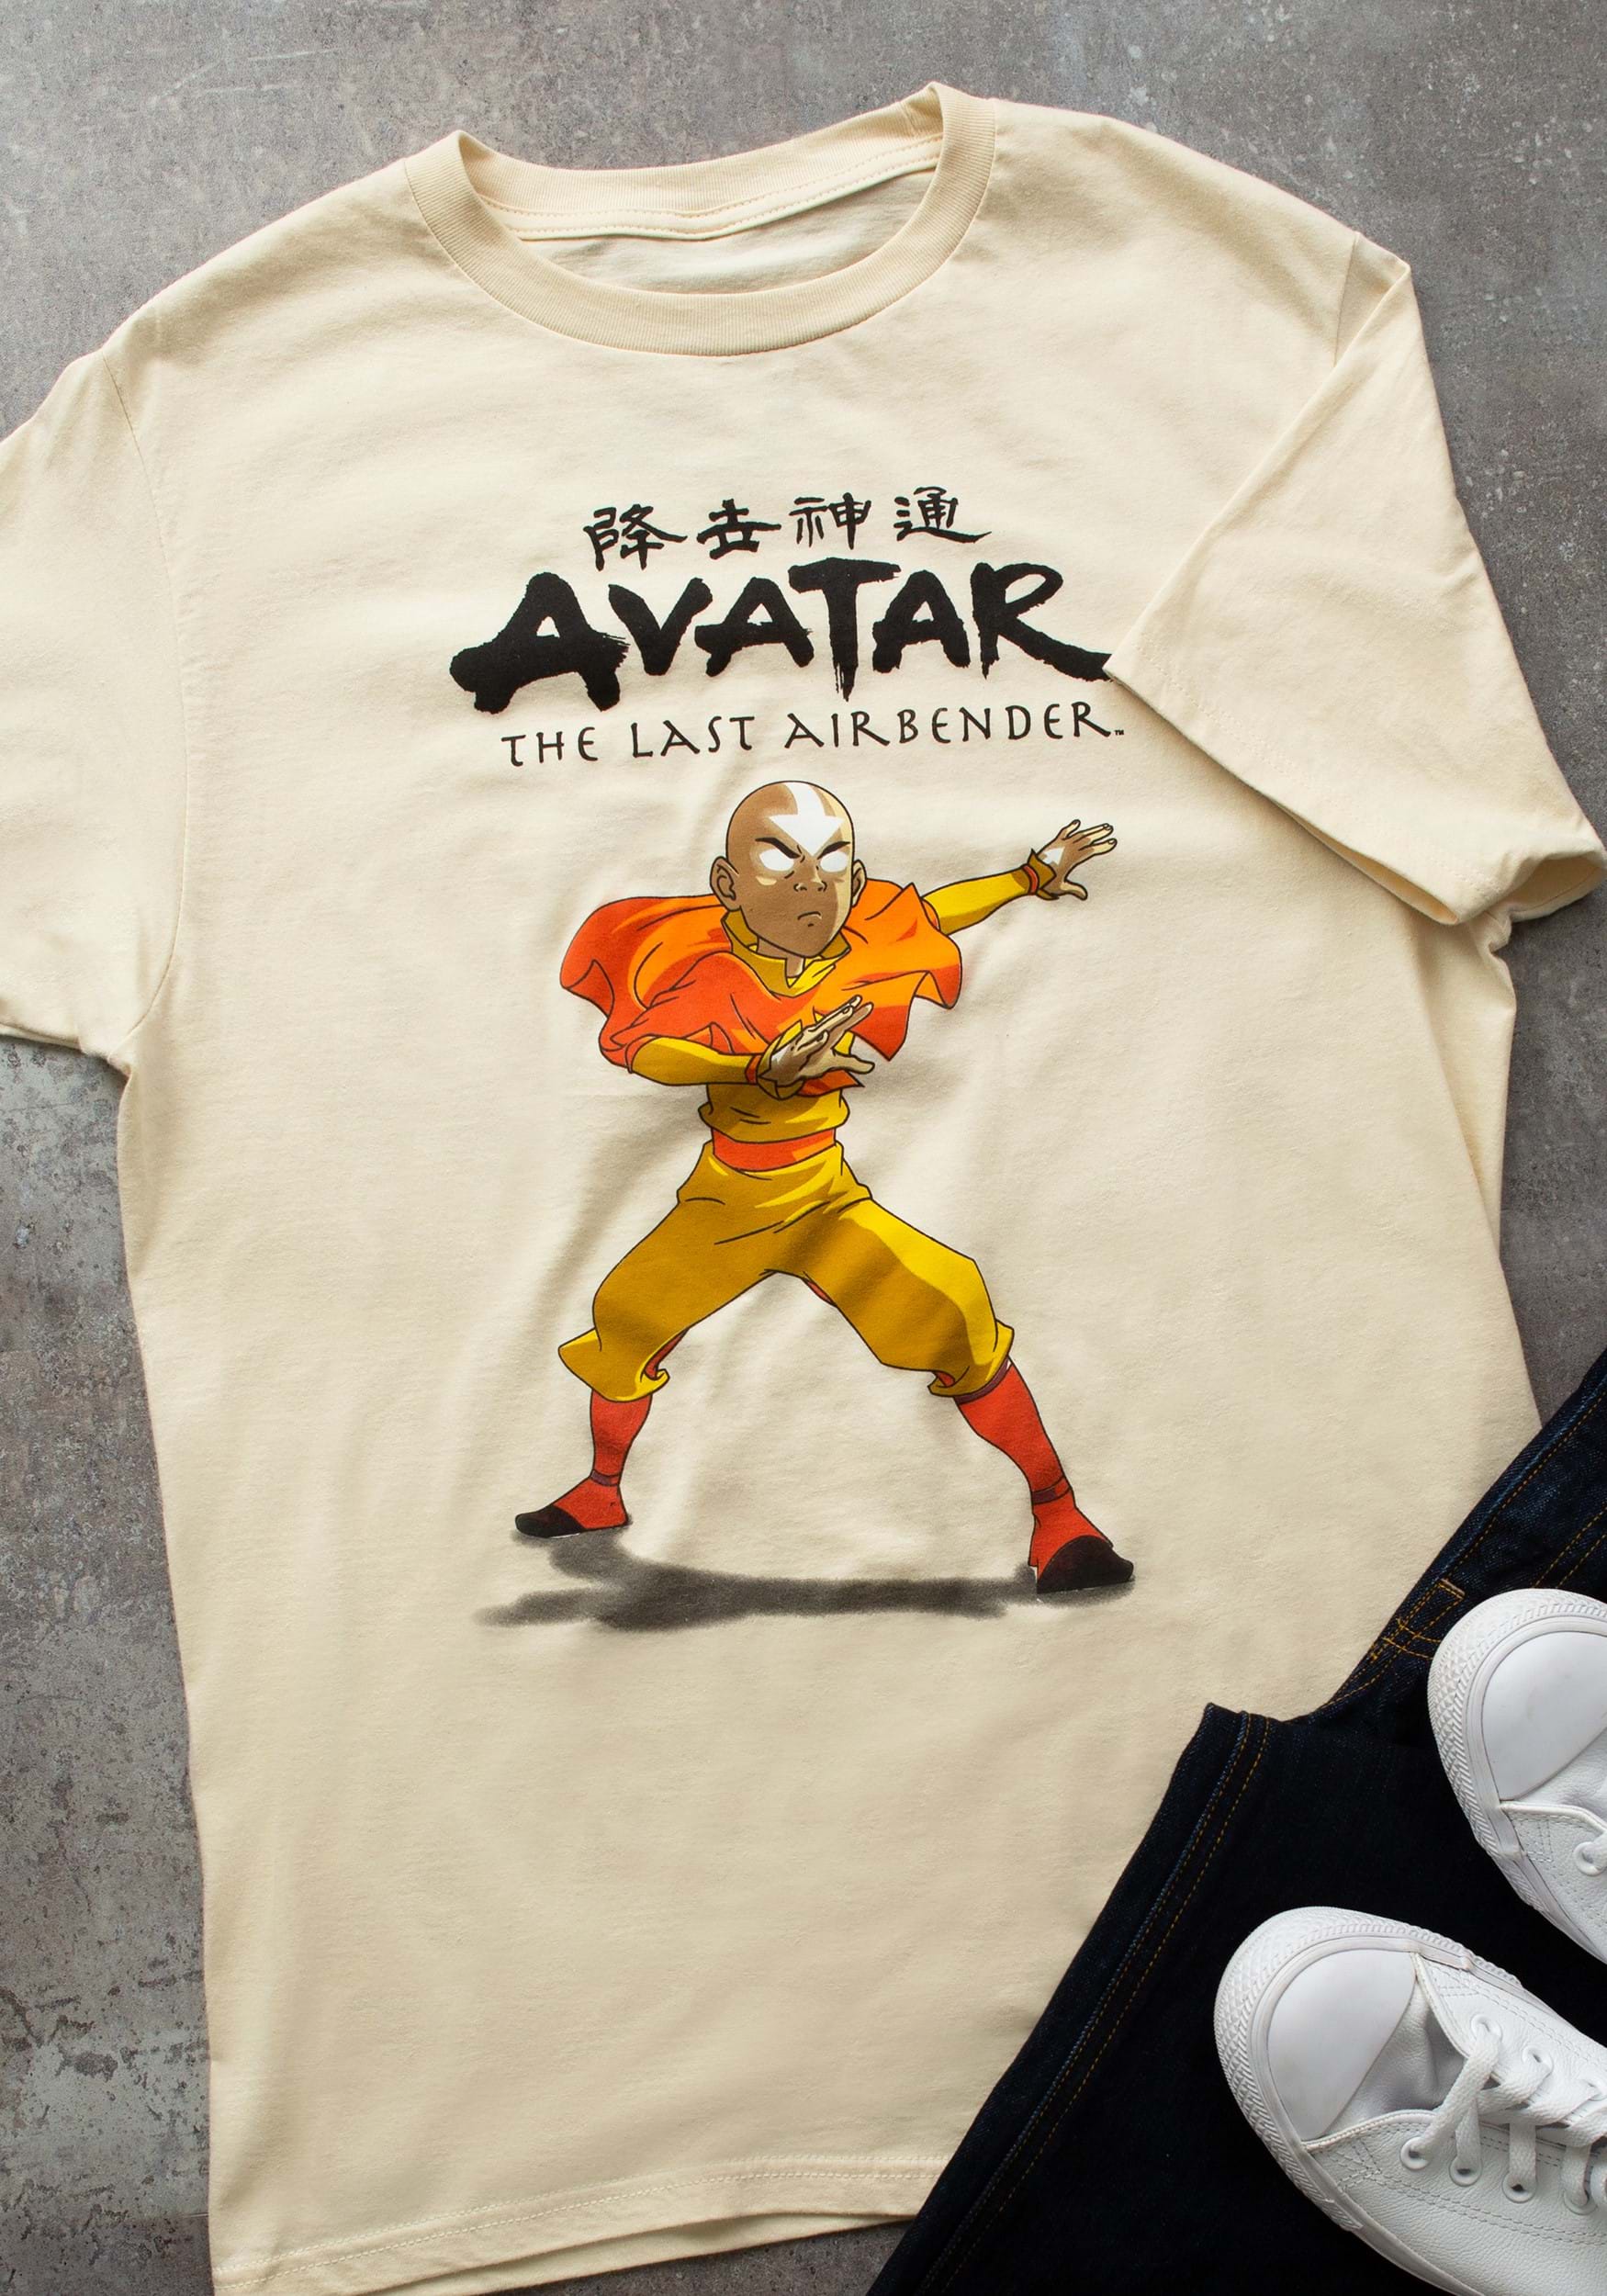 Neteyam Shirt Avatar Neteyam t shirt Avatar 2 The Way of Water t shirt  ST8663  eBay